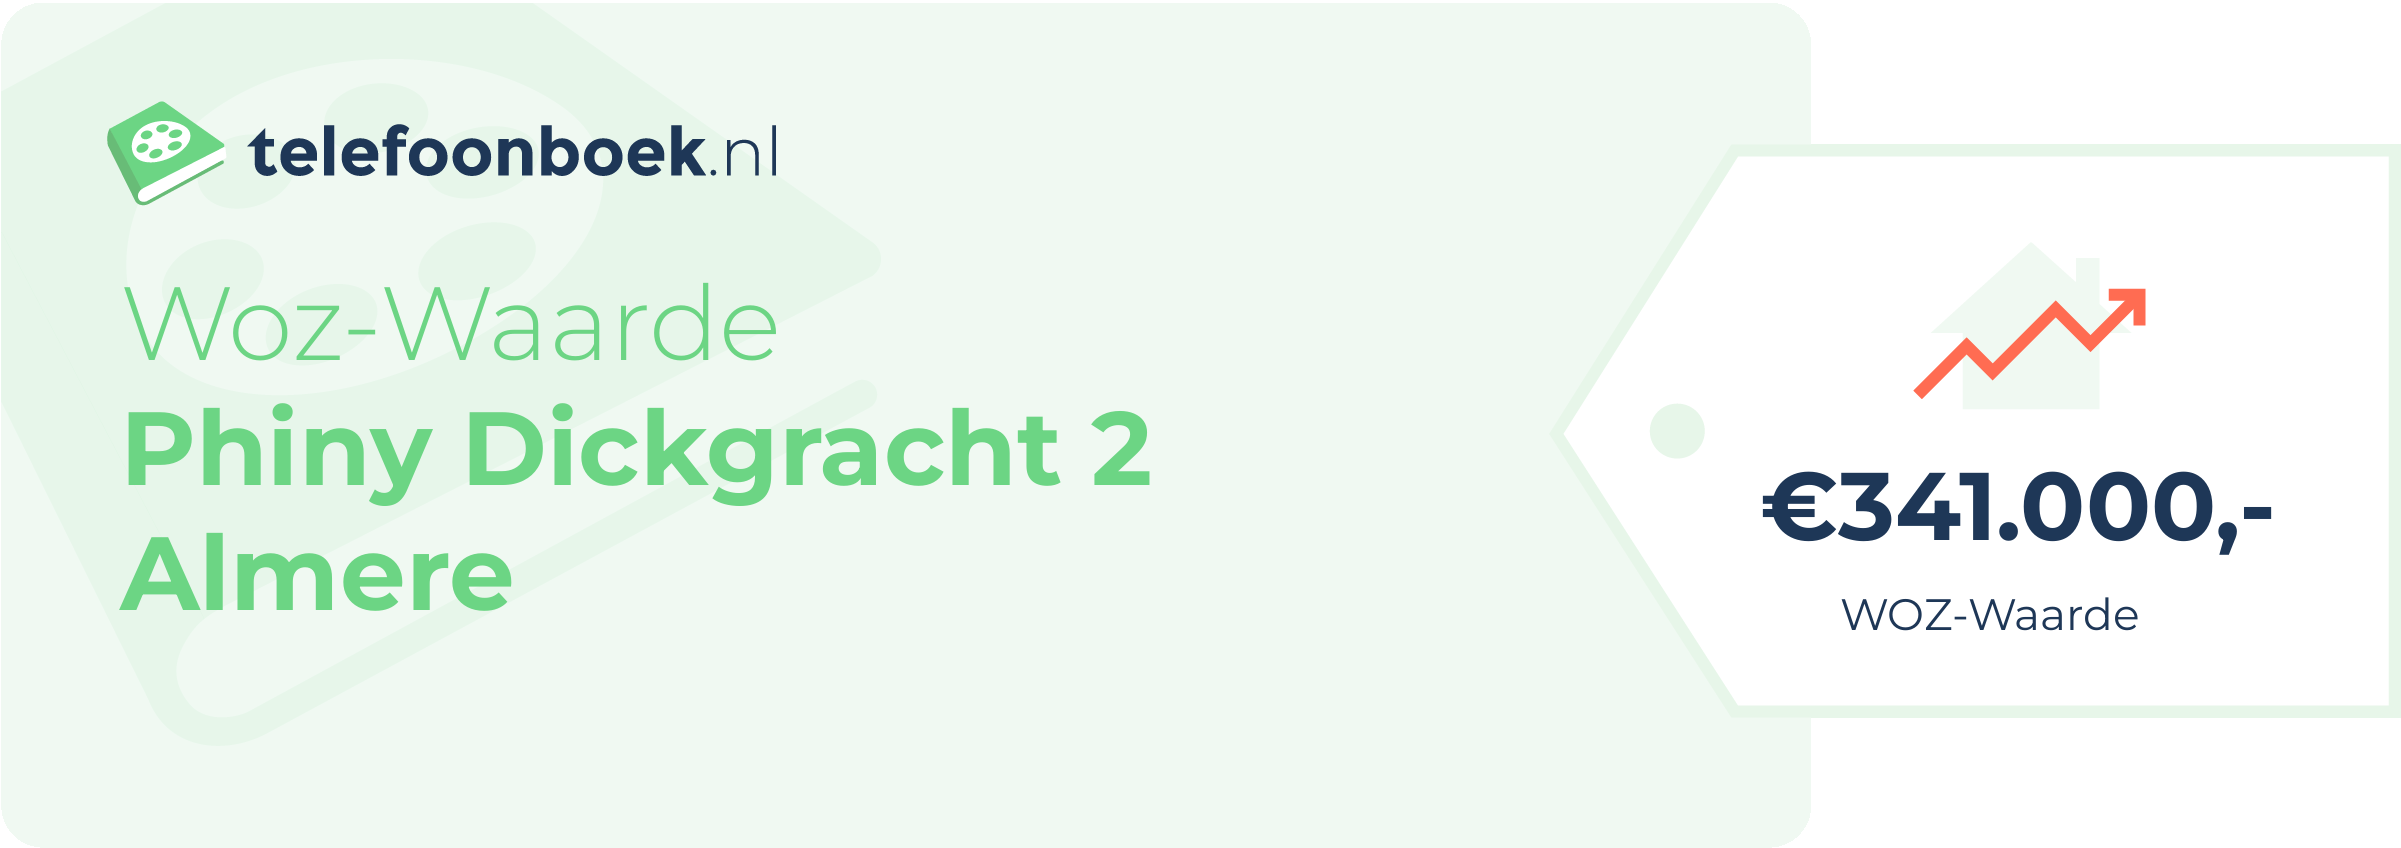 WOZ-waarde Phiny Dickgracht 2 Almere